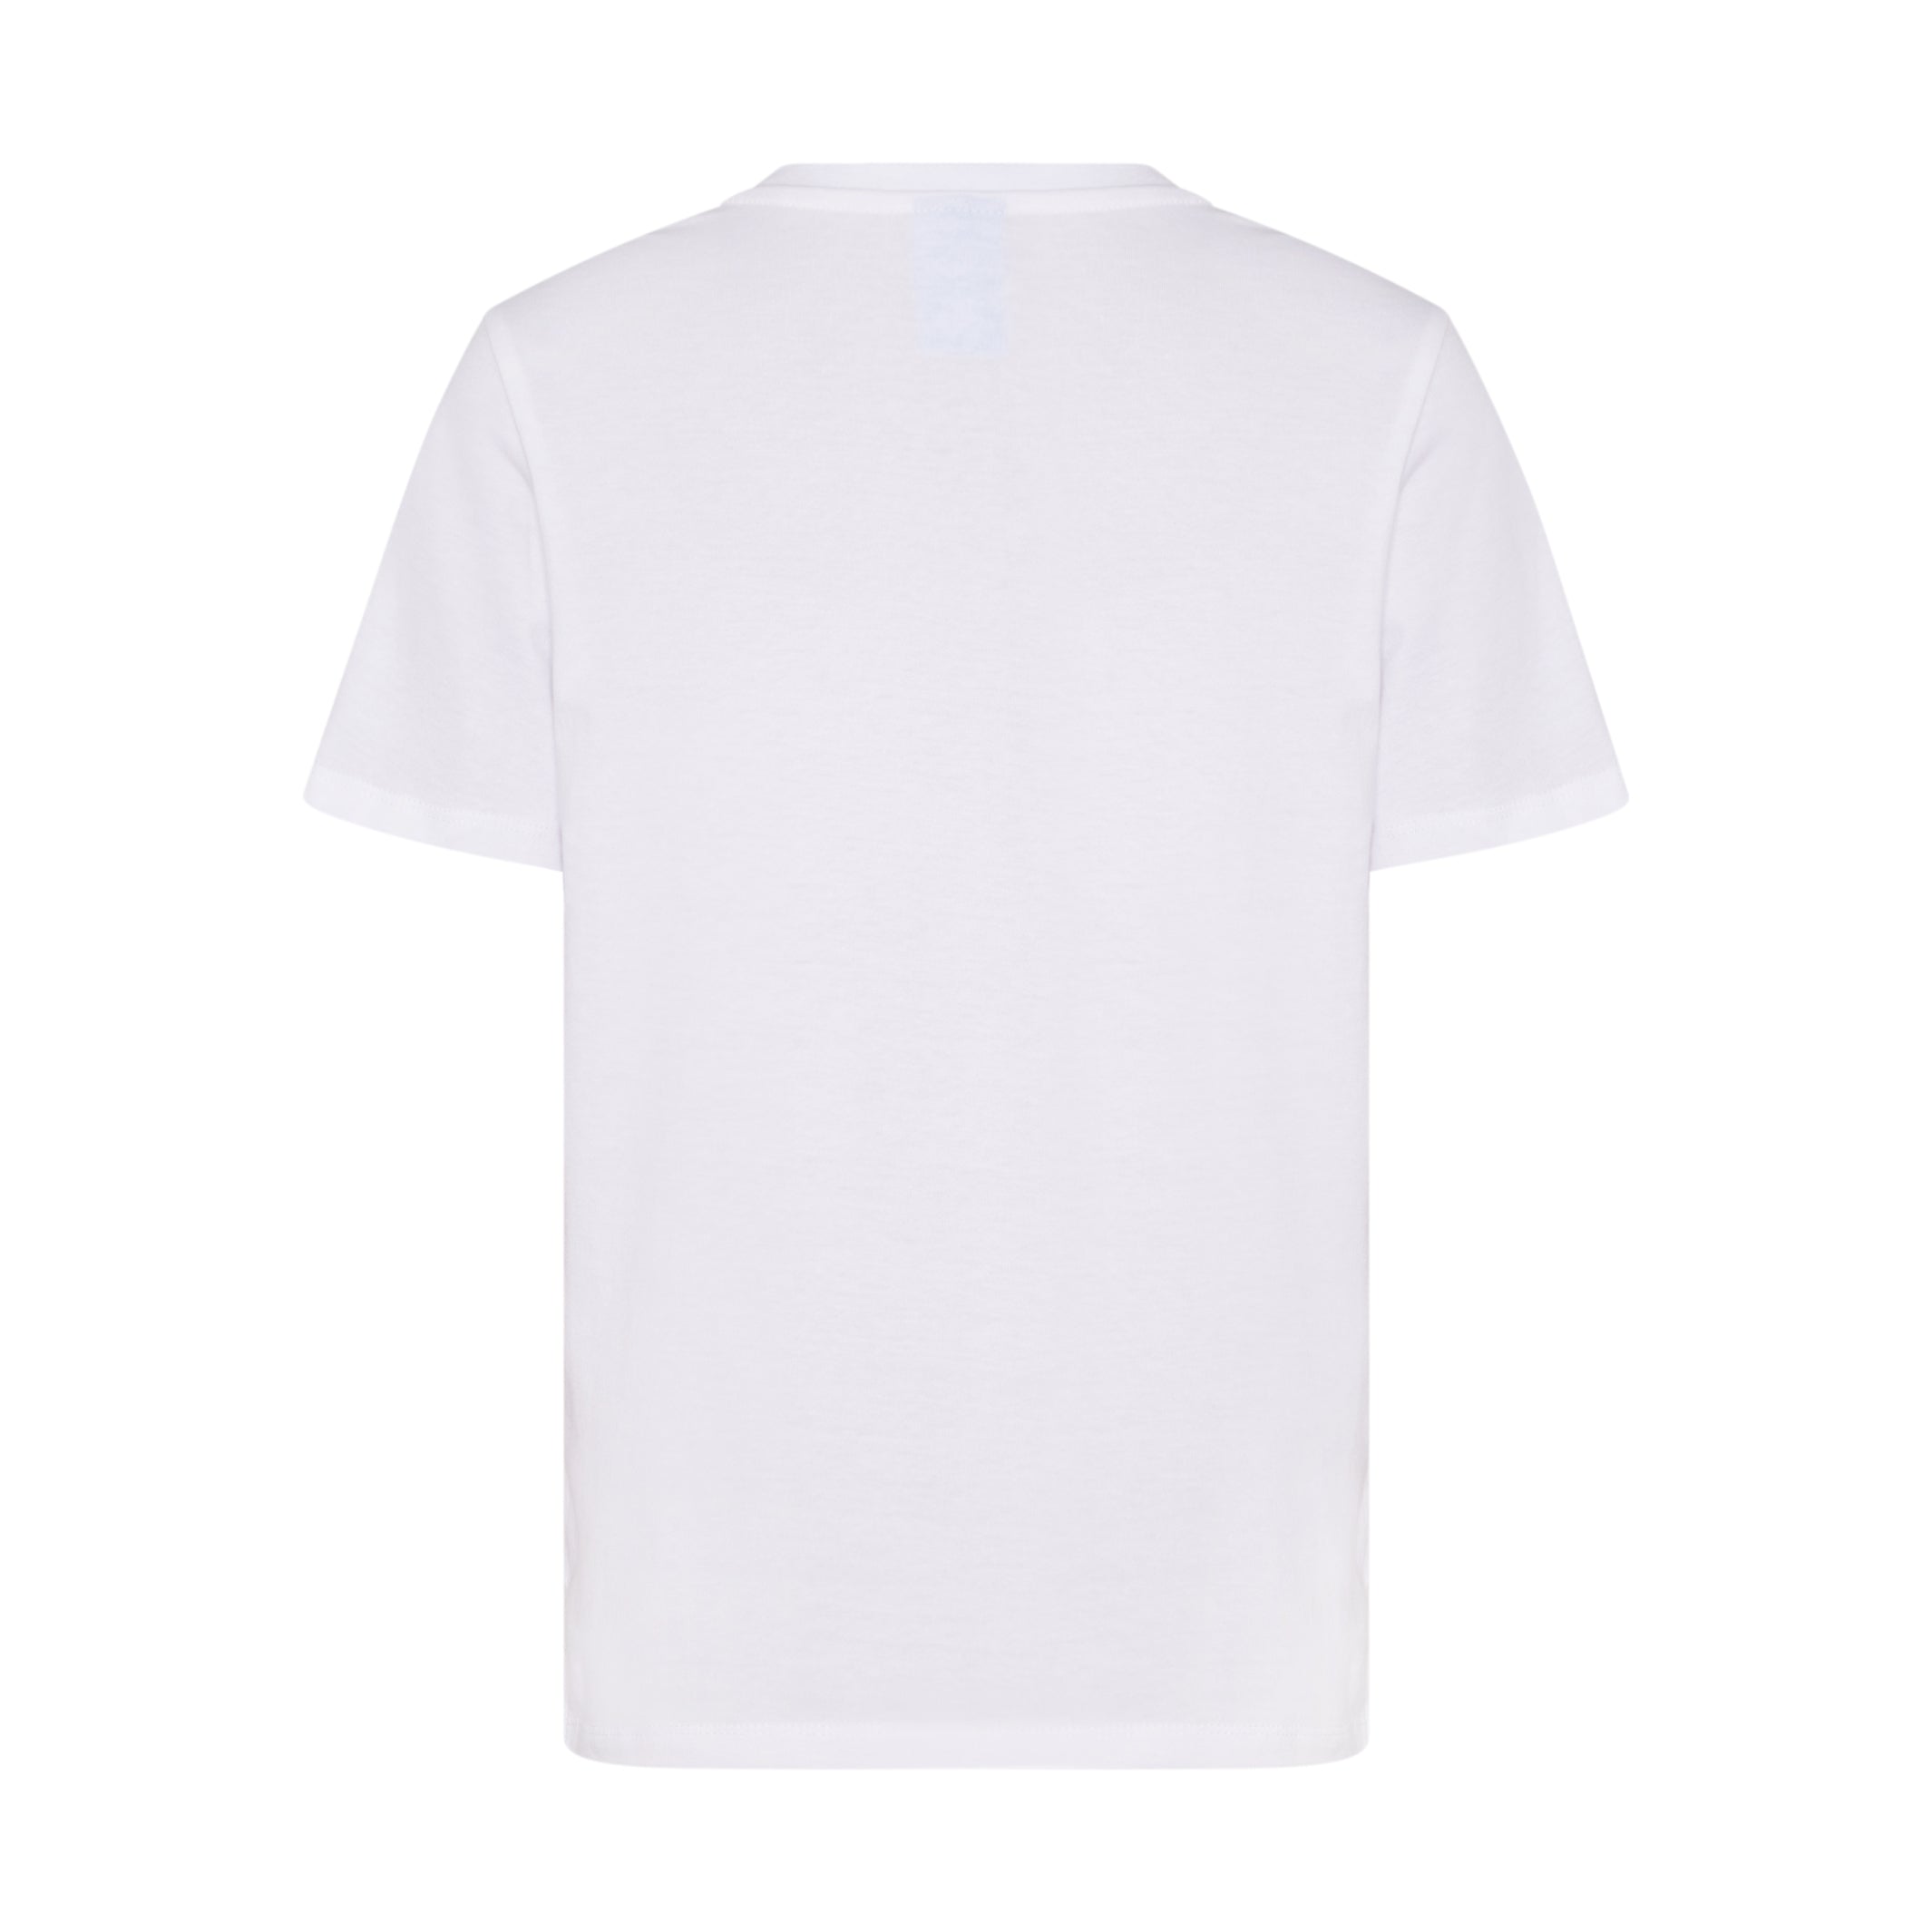 Boy's White T-Shirt SmileyWorld Pocket Back View